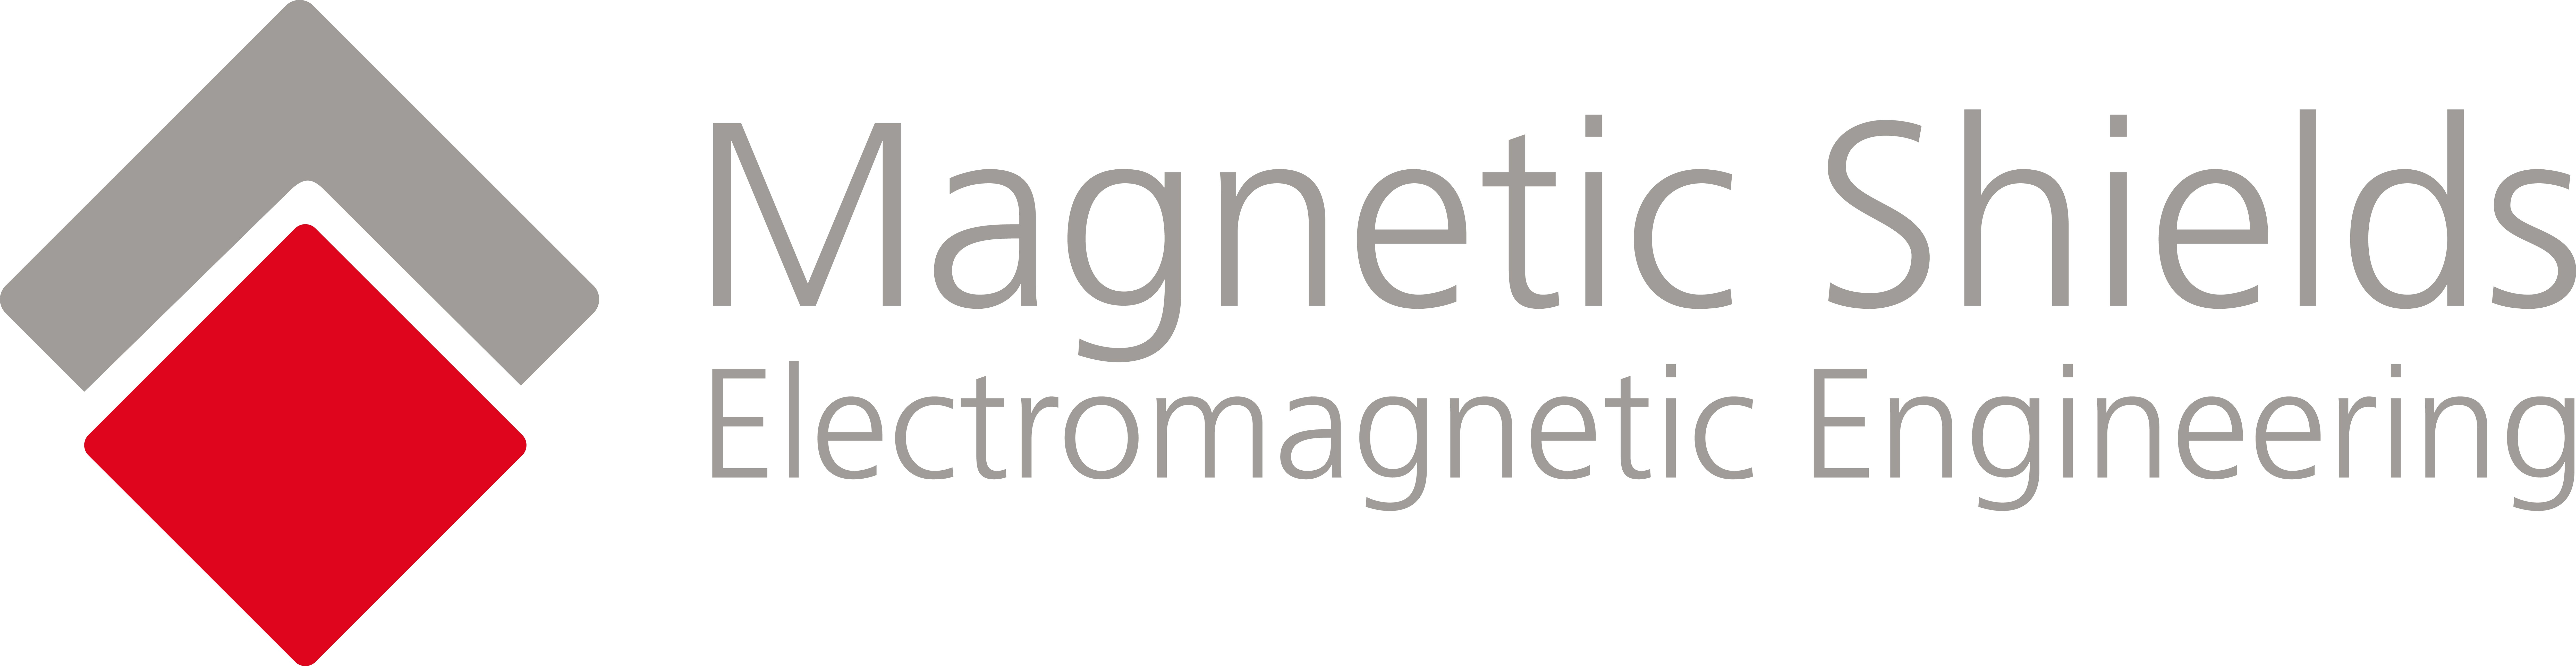 Magnetic Shields Ltd - TribePost Recruitment Limited